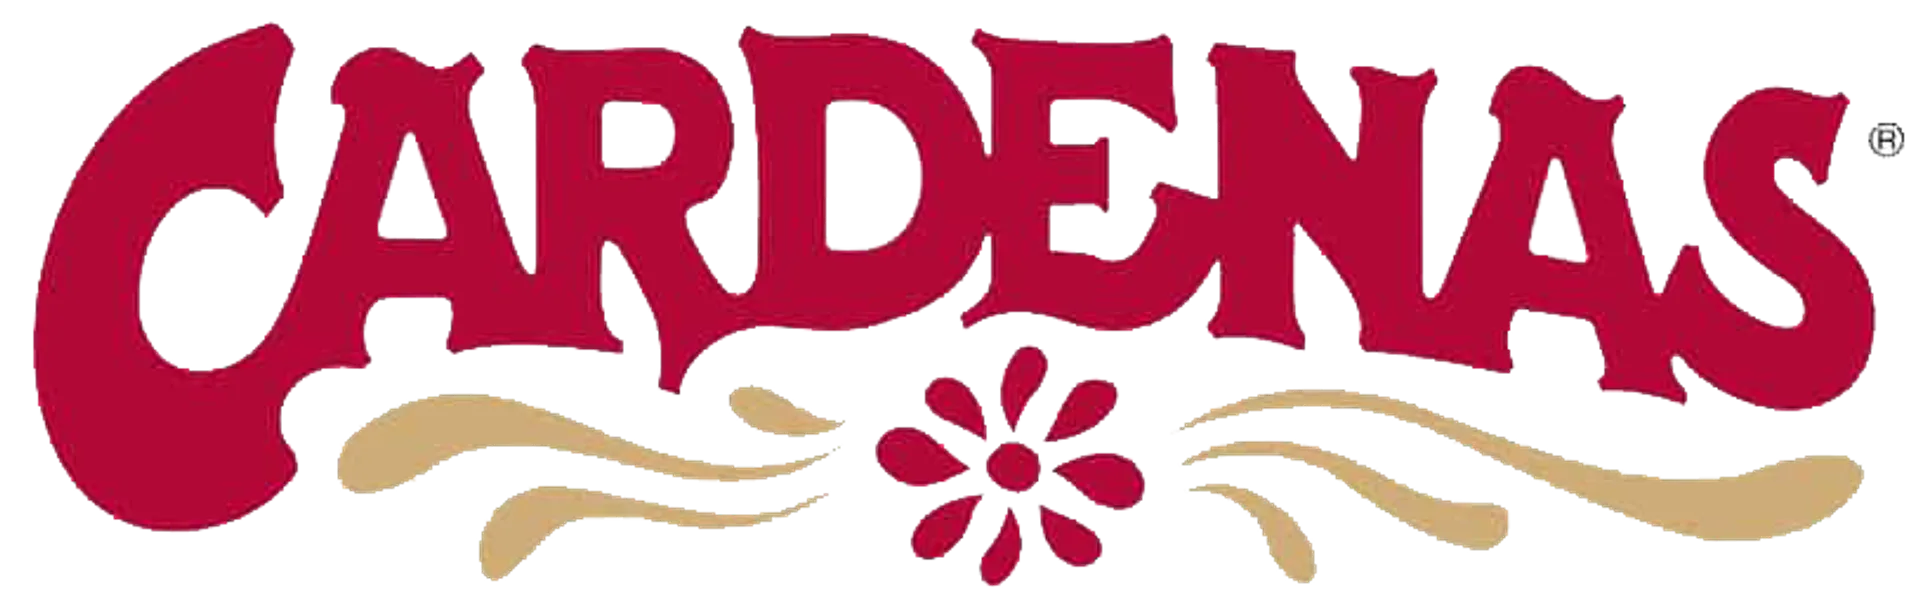 CARDENAS logo. Current weekly ad